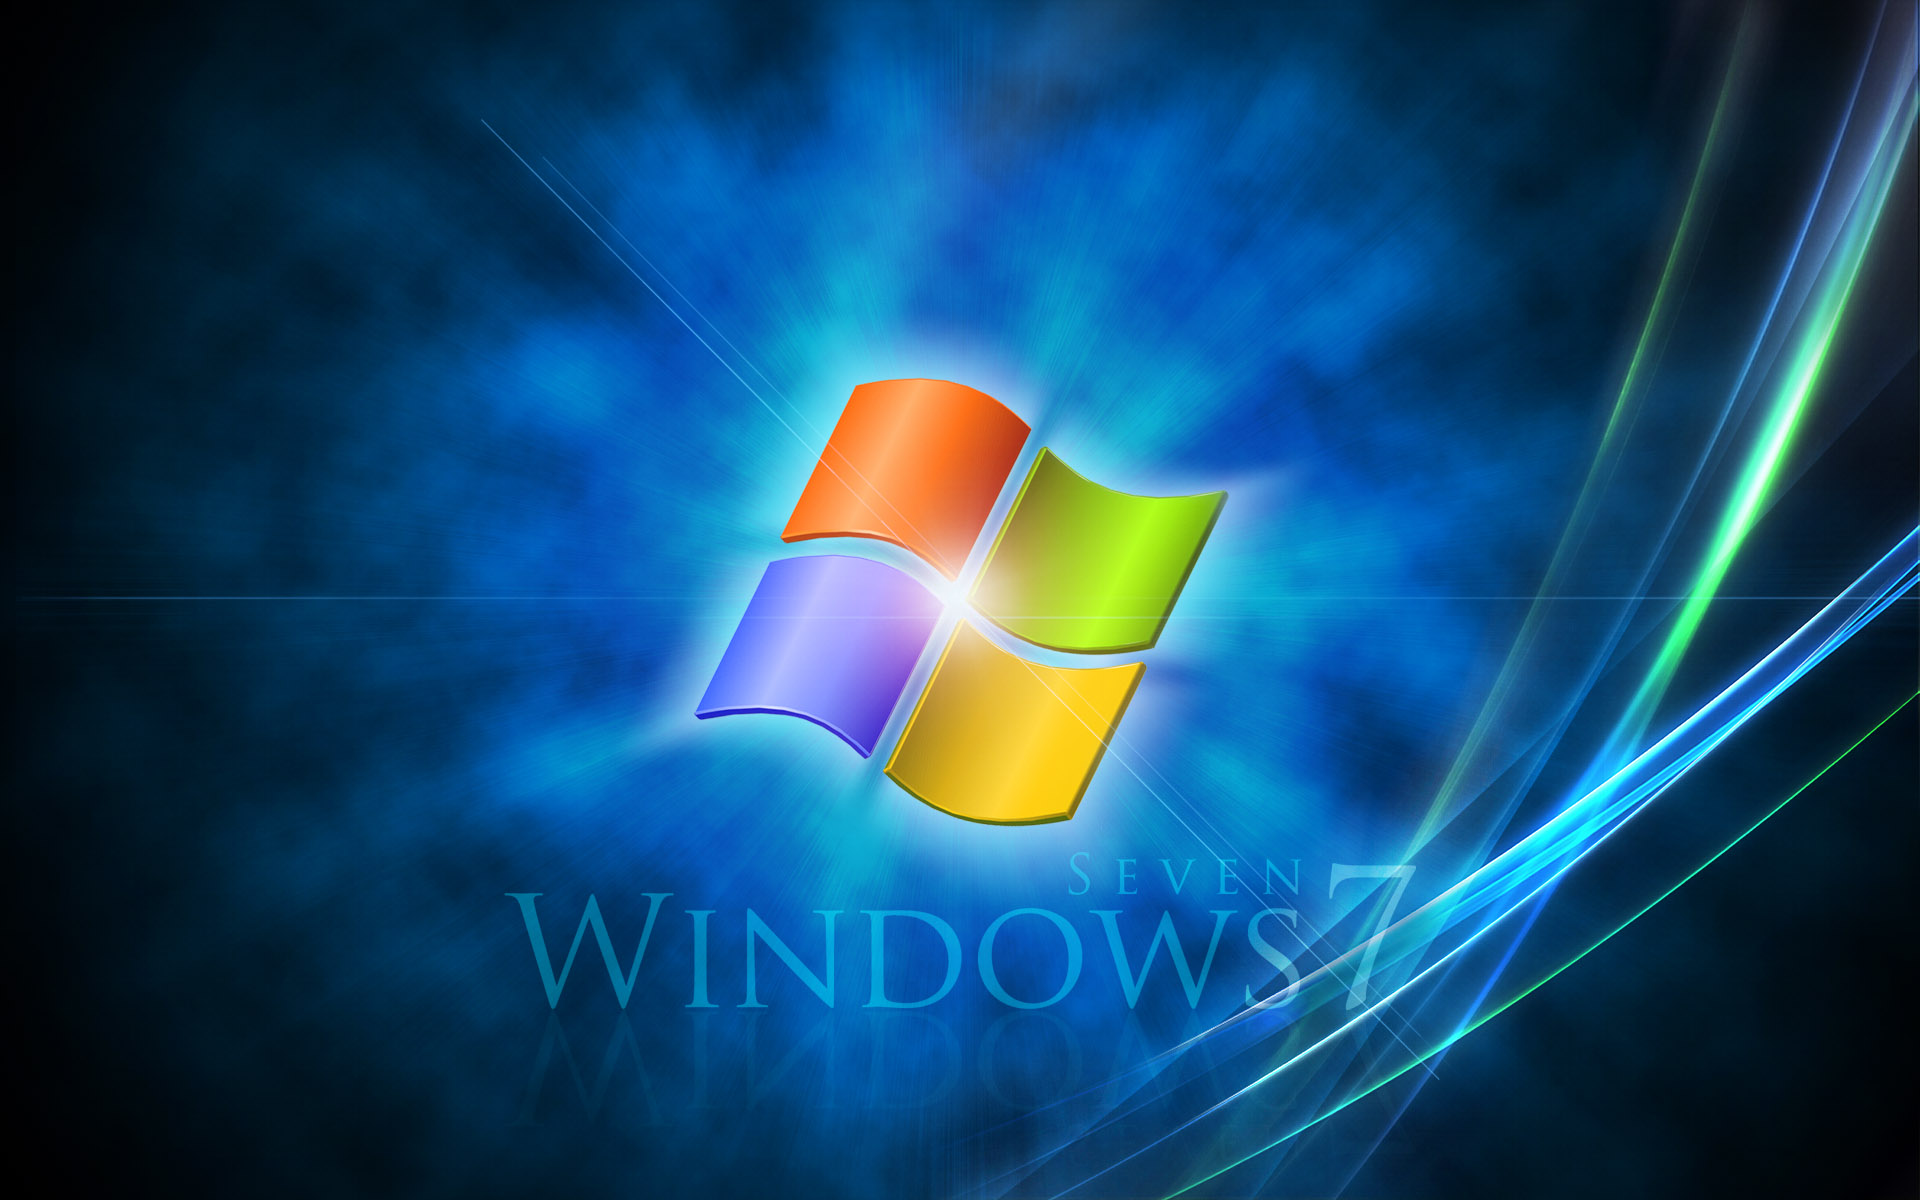 Windows logo on a bright, light background.